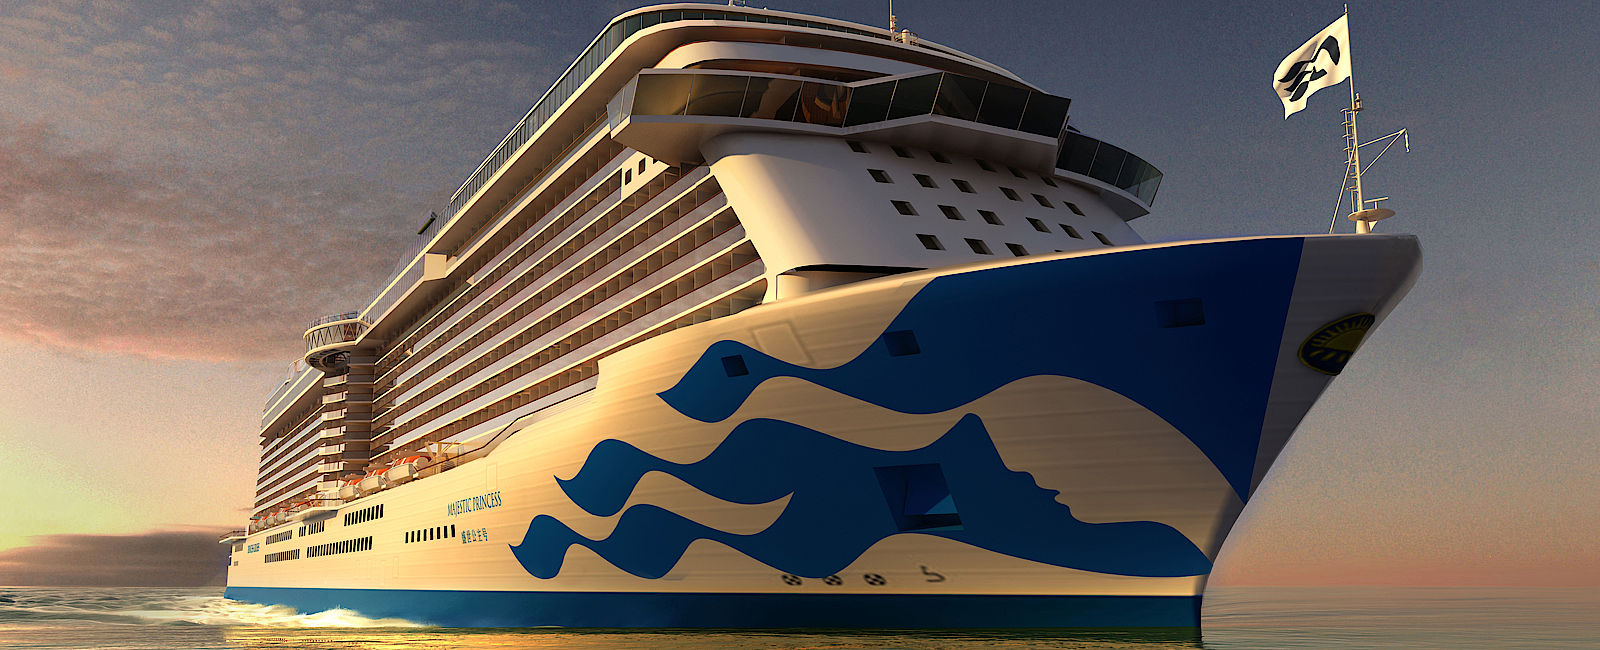 KREUZFAHRT NEWS
 Princess Cruises routet im Mittelmeer um 
